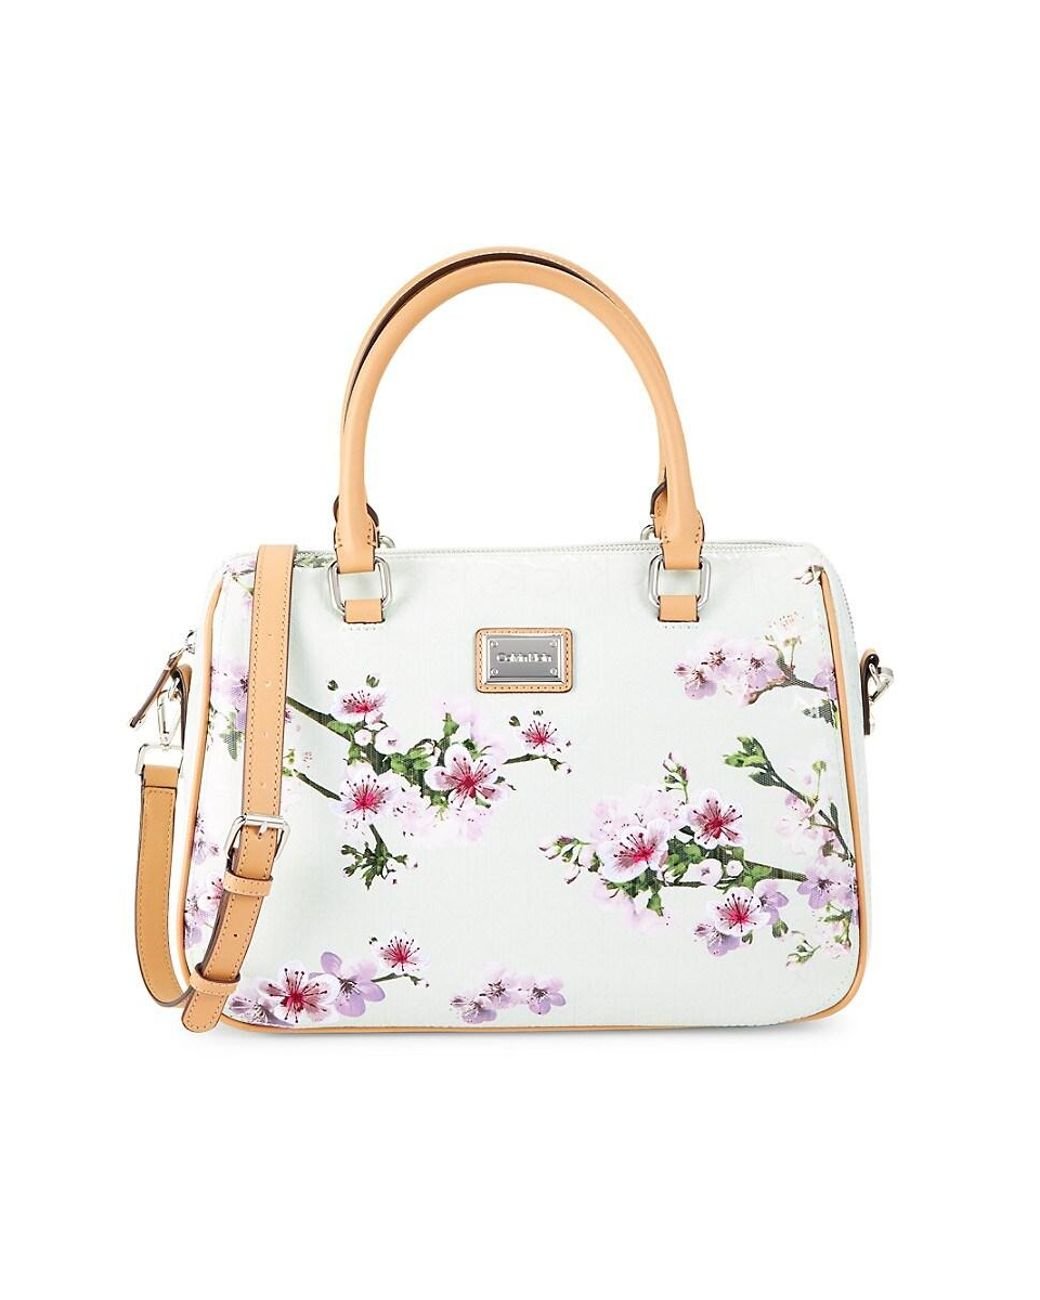 Descubrir 30+ imagen calvin klein cherry blossom purse